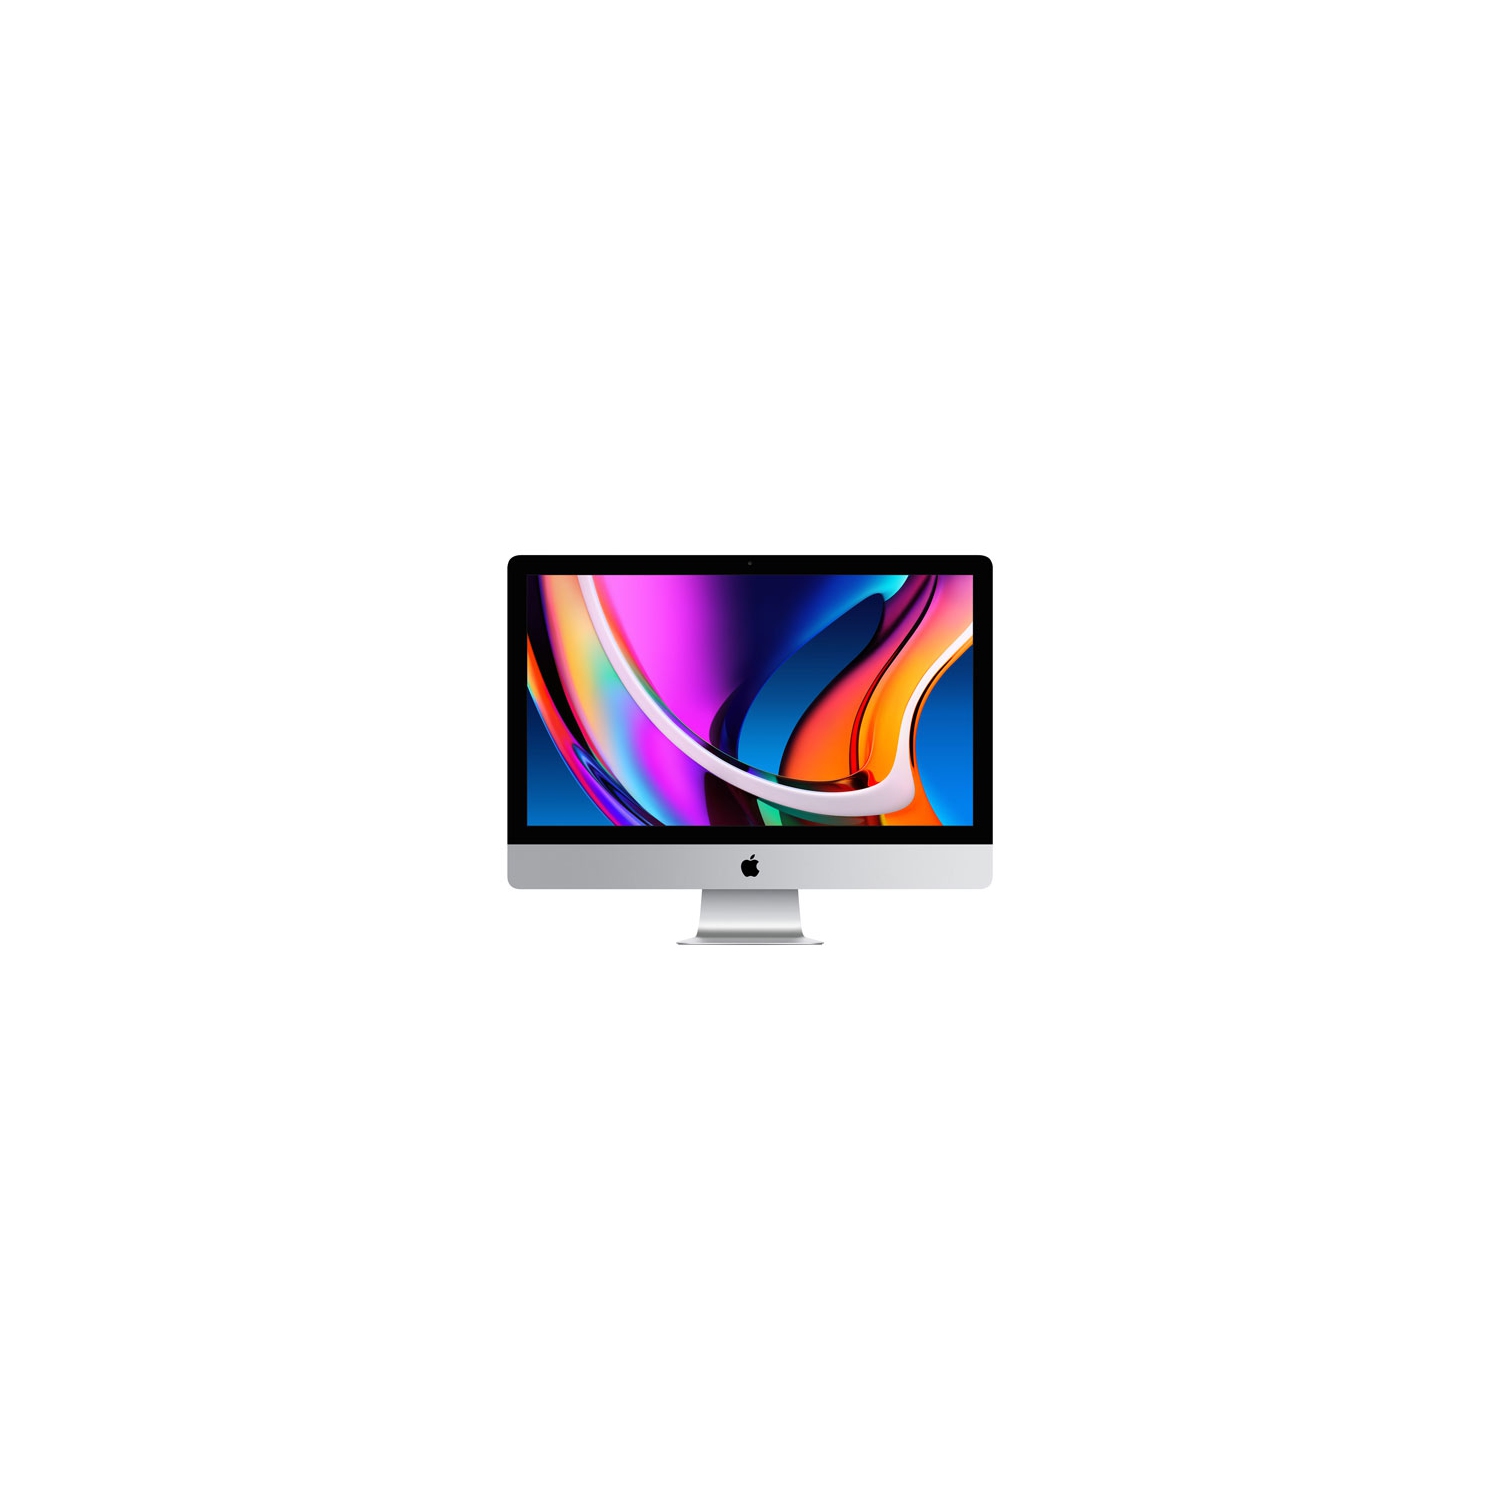 Open Box - Apple iMac 27" Retina 5K Computer (MXWT2LL/A) - Current Model - Intel Core i5 Hexa-Core 10th Gen 3.1GHz - 8GB RAM - 256GB SSD - English